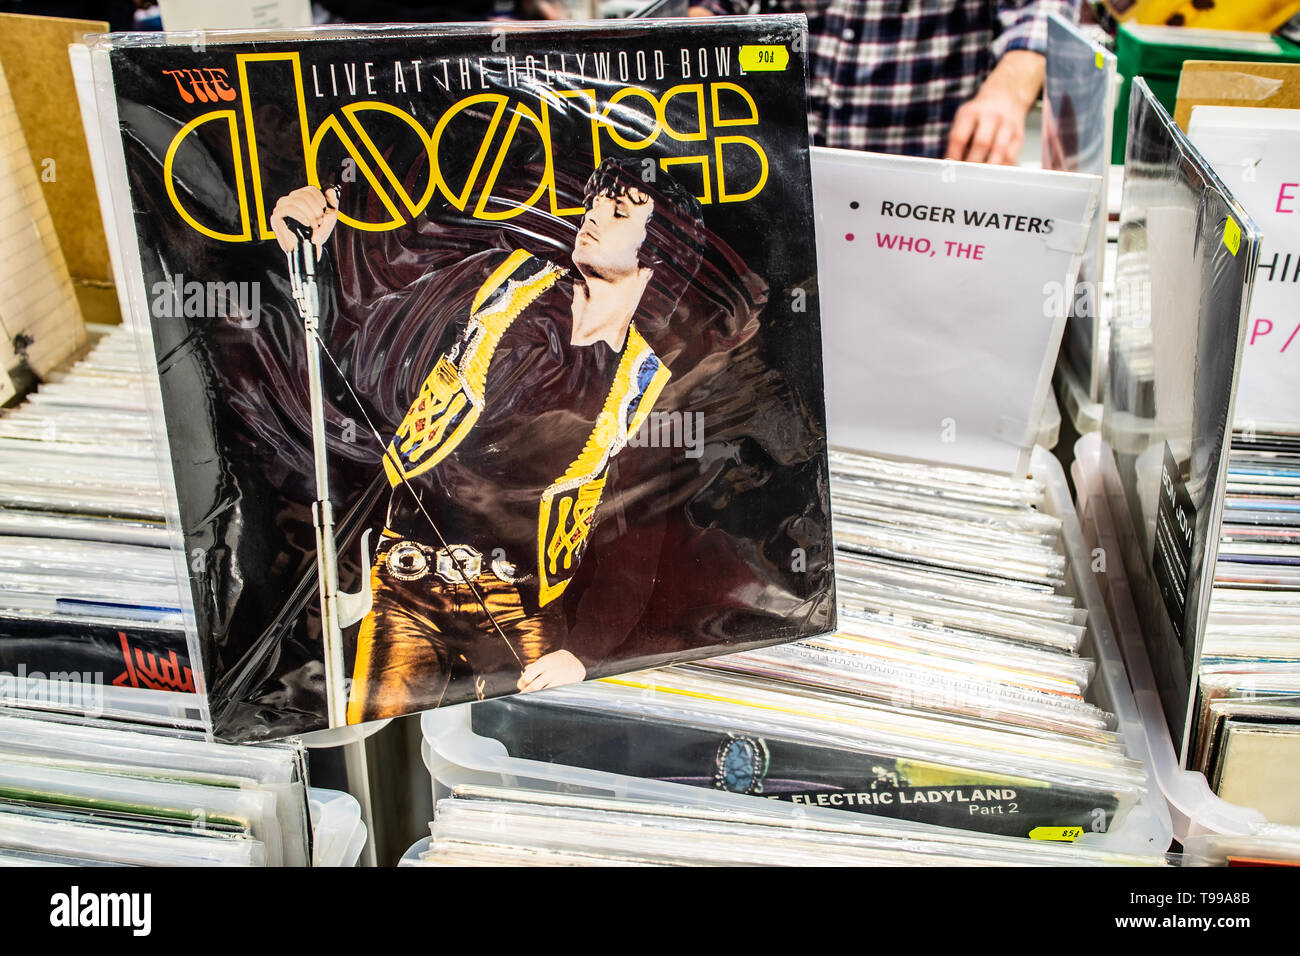 Nadarzyn, Poland, May 11, 2019 The Doors vinyl album on display for sale, Vinyl, LP, Album, Rock, American rock band, collection of Vinyls Stock Photo